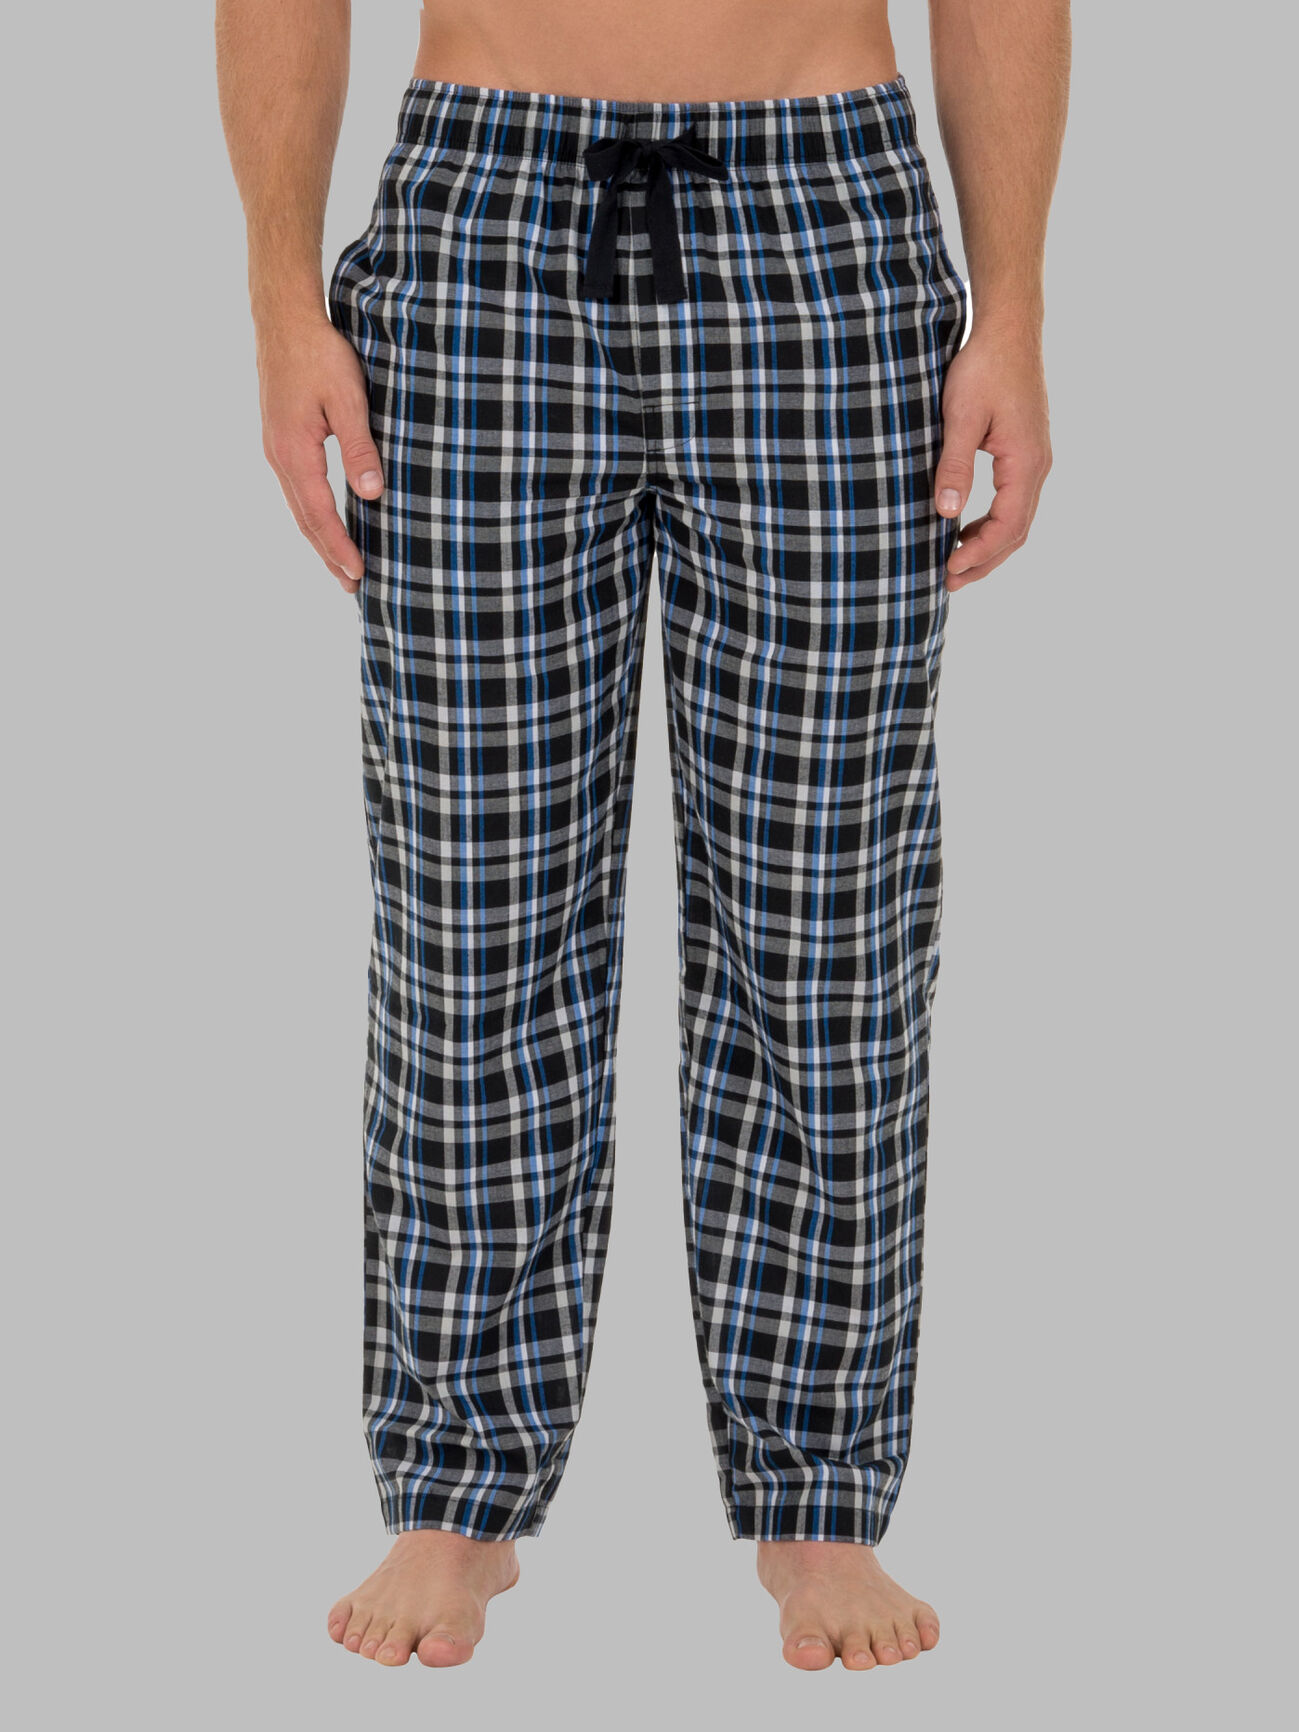 Women's 2-pack Lounge Pants Comfortable Pajama Pants Plaid Pajama